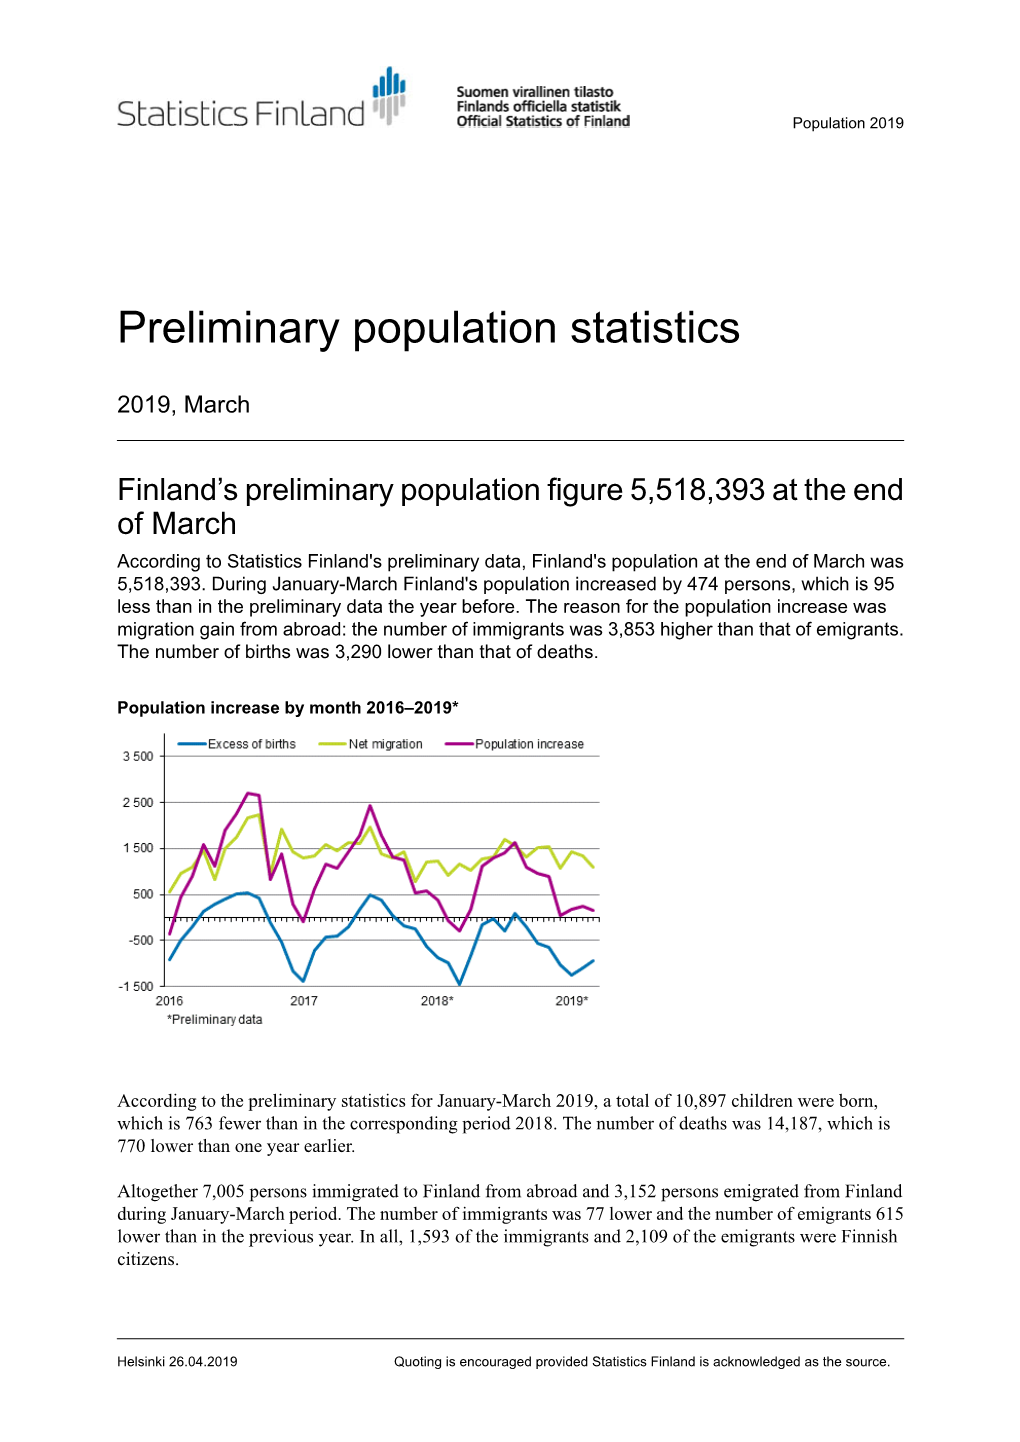 Preliminary Population Statistics 2019, March